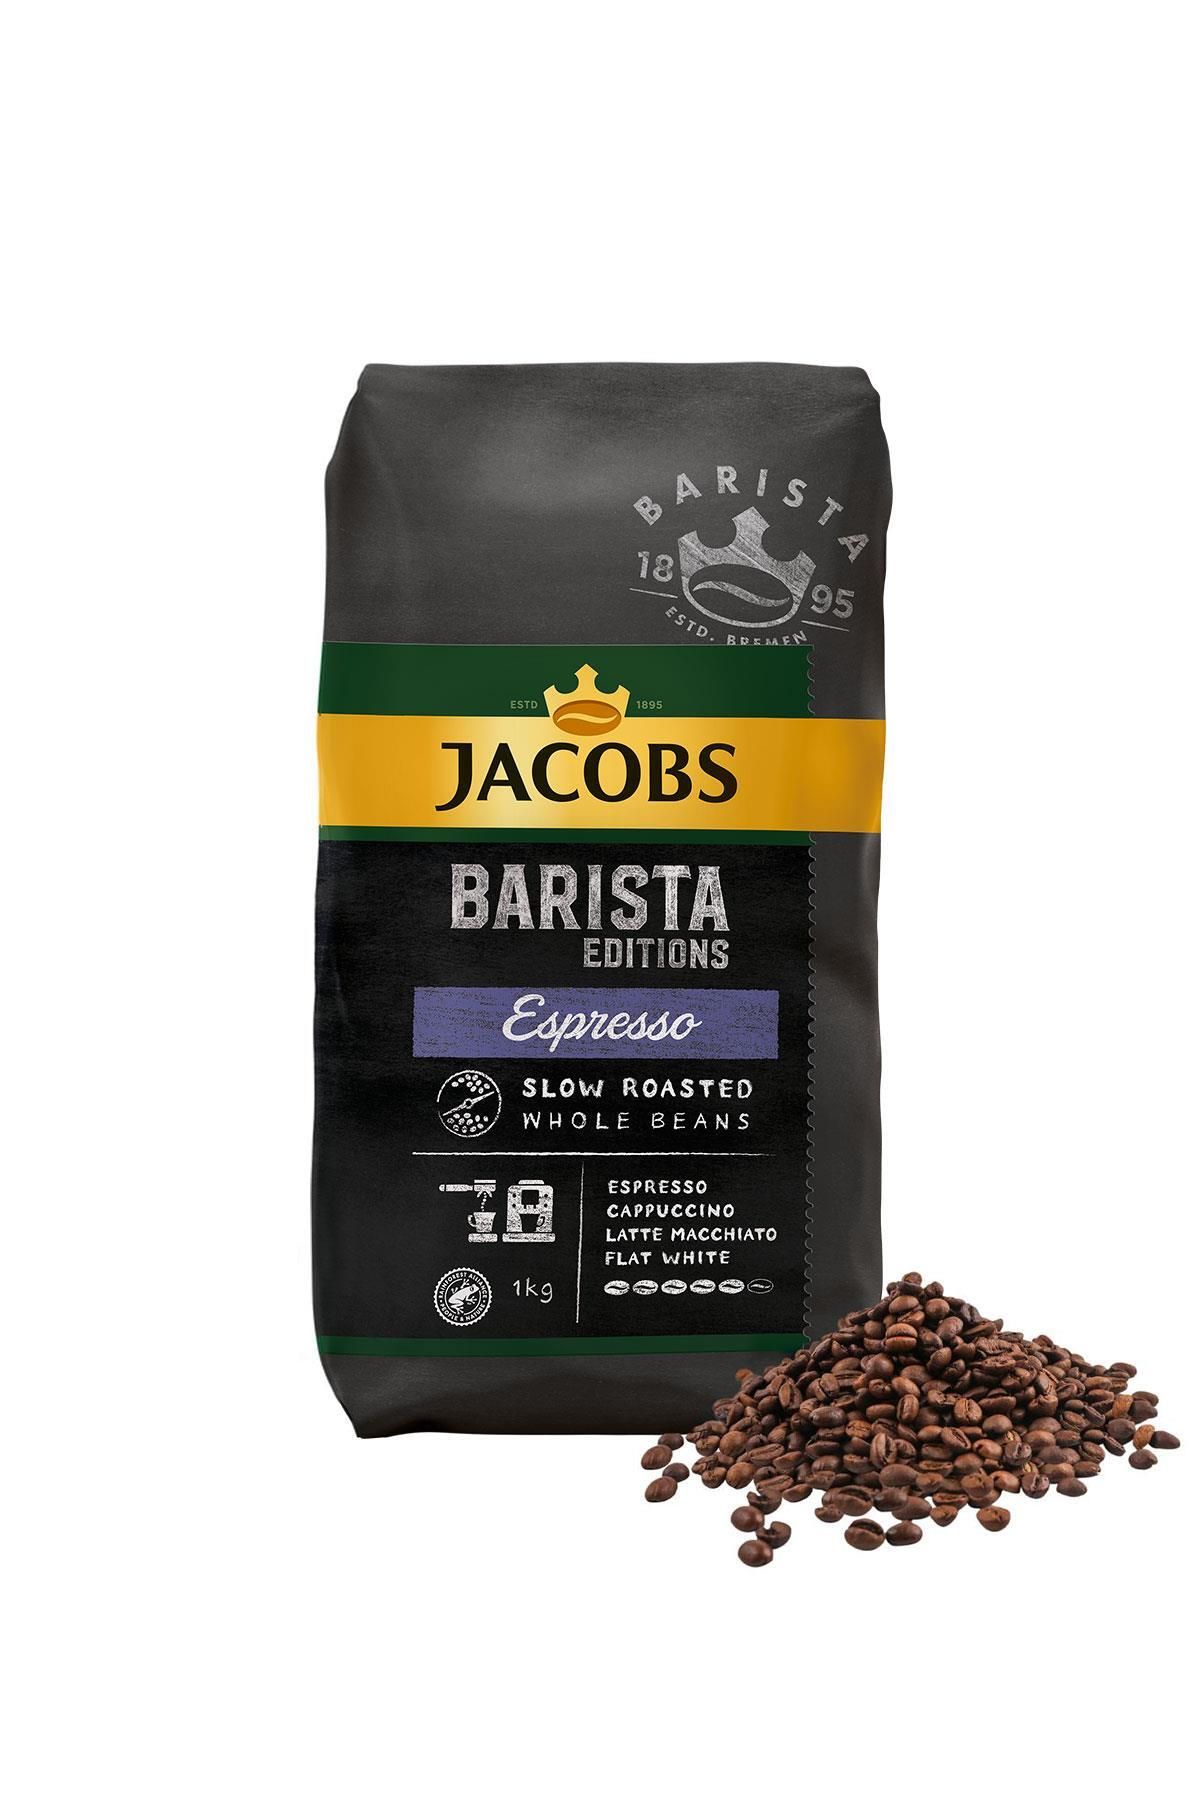 Jacobs Barista Çekirdek Kahve %100 Arabica Espresso 1 Kg